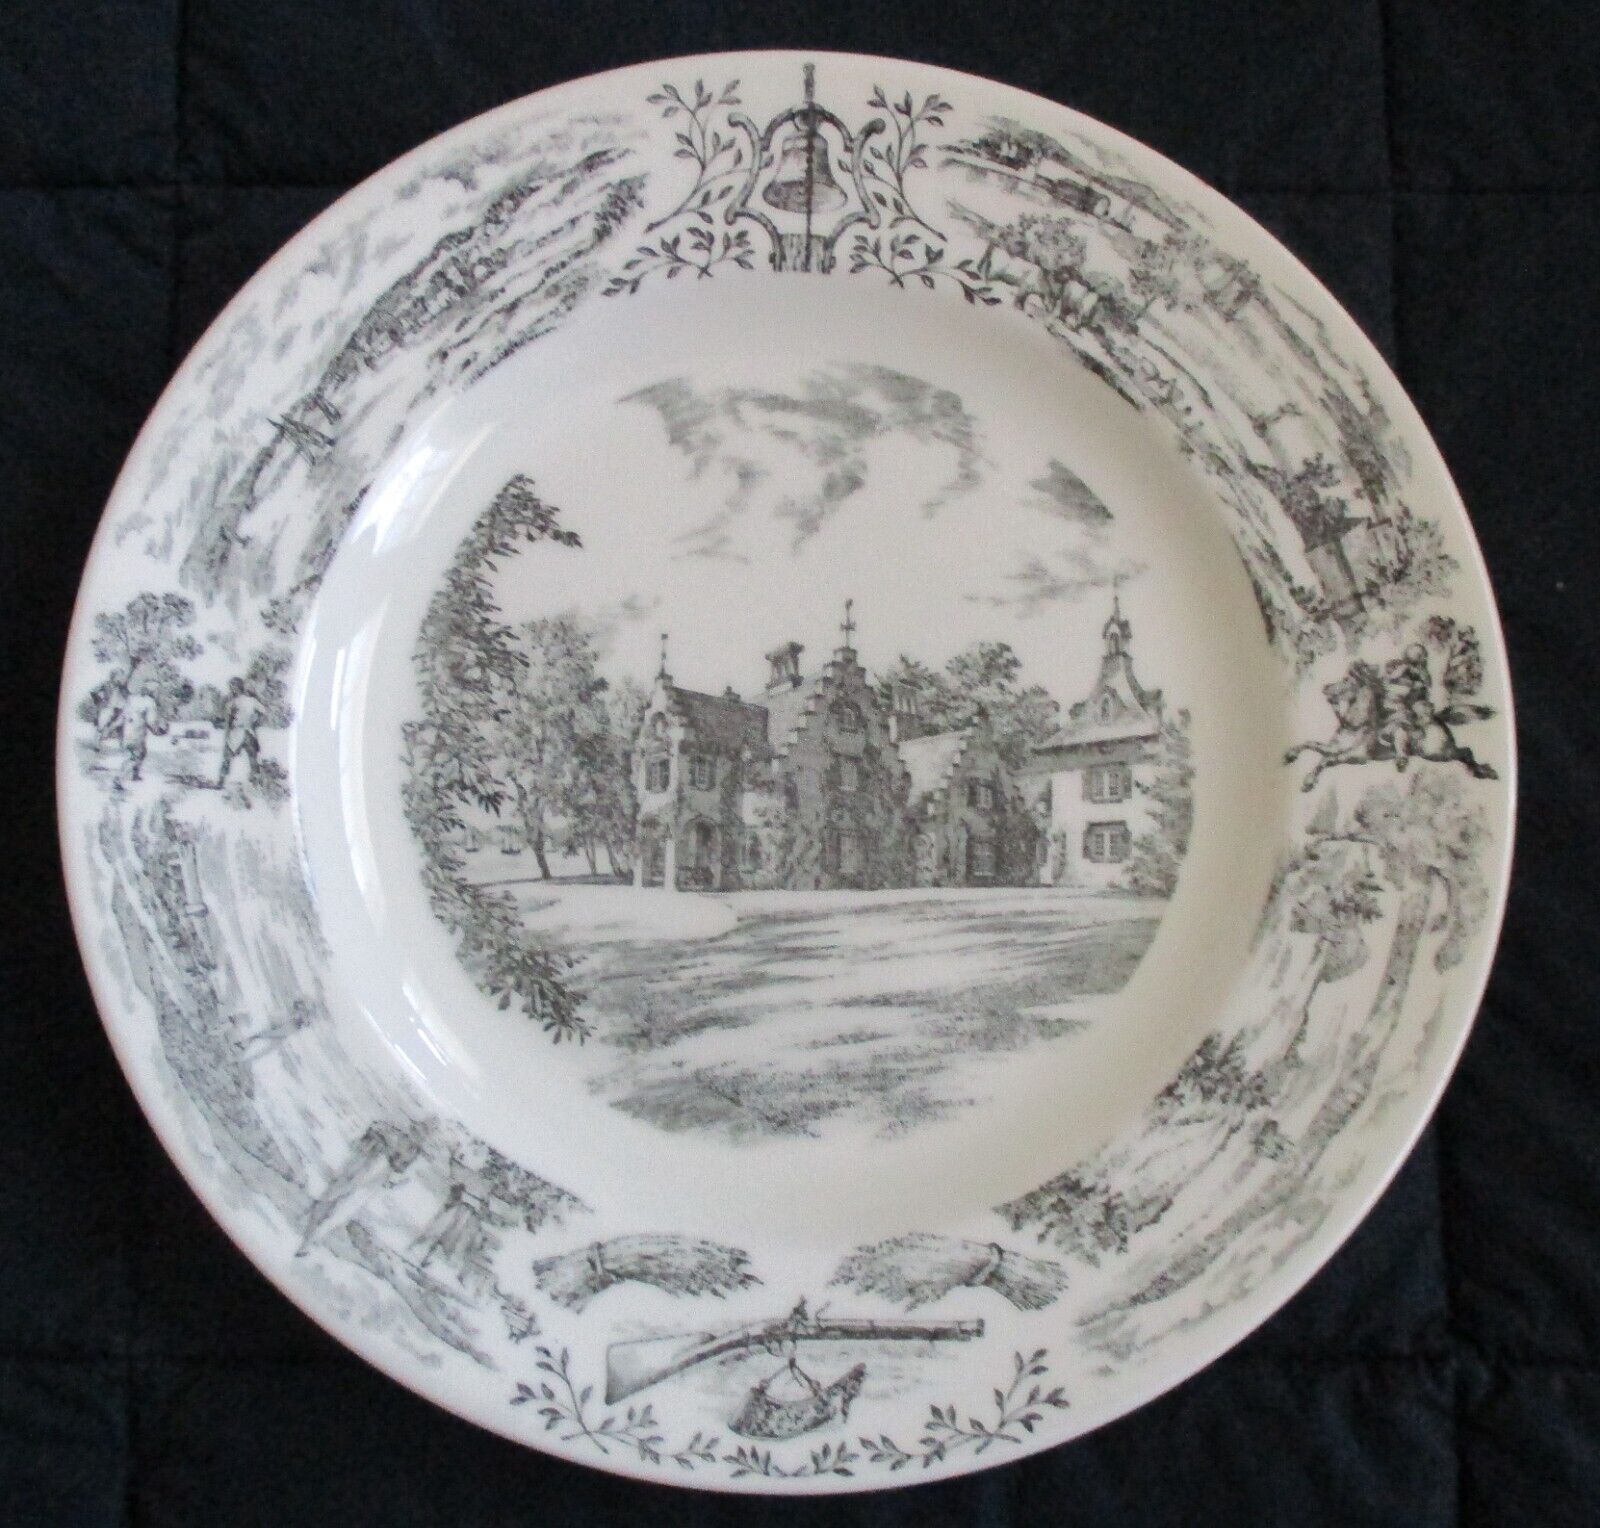 Vintage Souvenir Wedgwood Plate Sunnyside Washington Irving Tarrytown New York